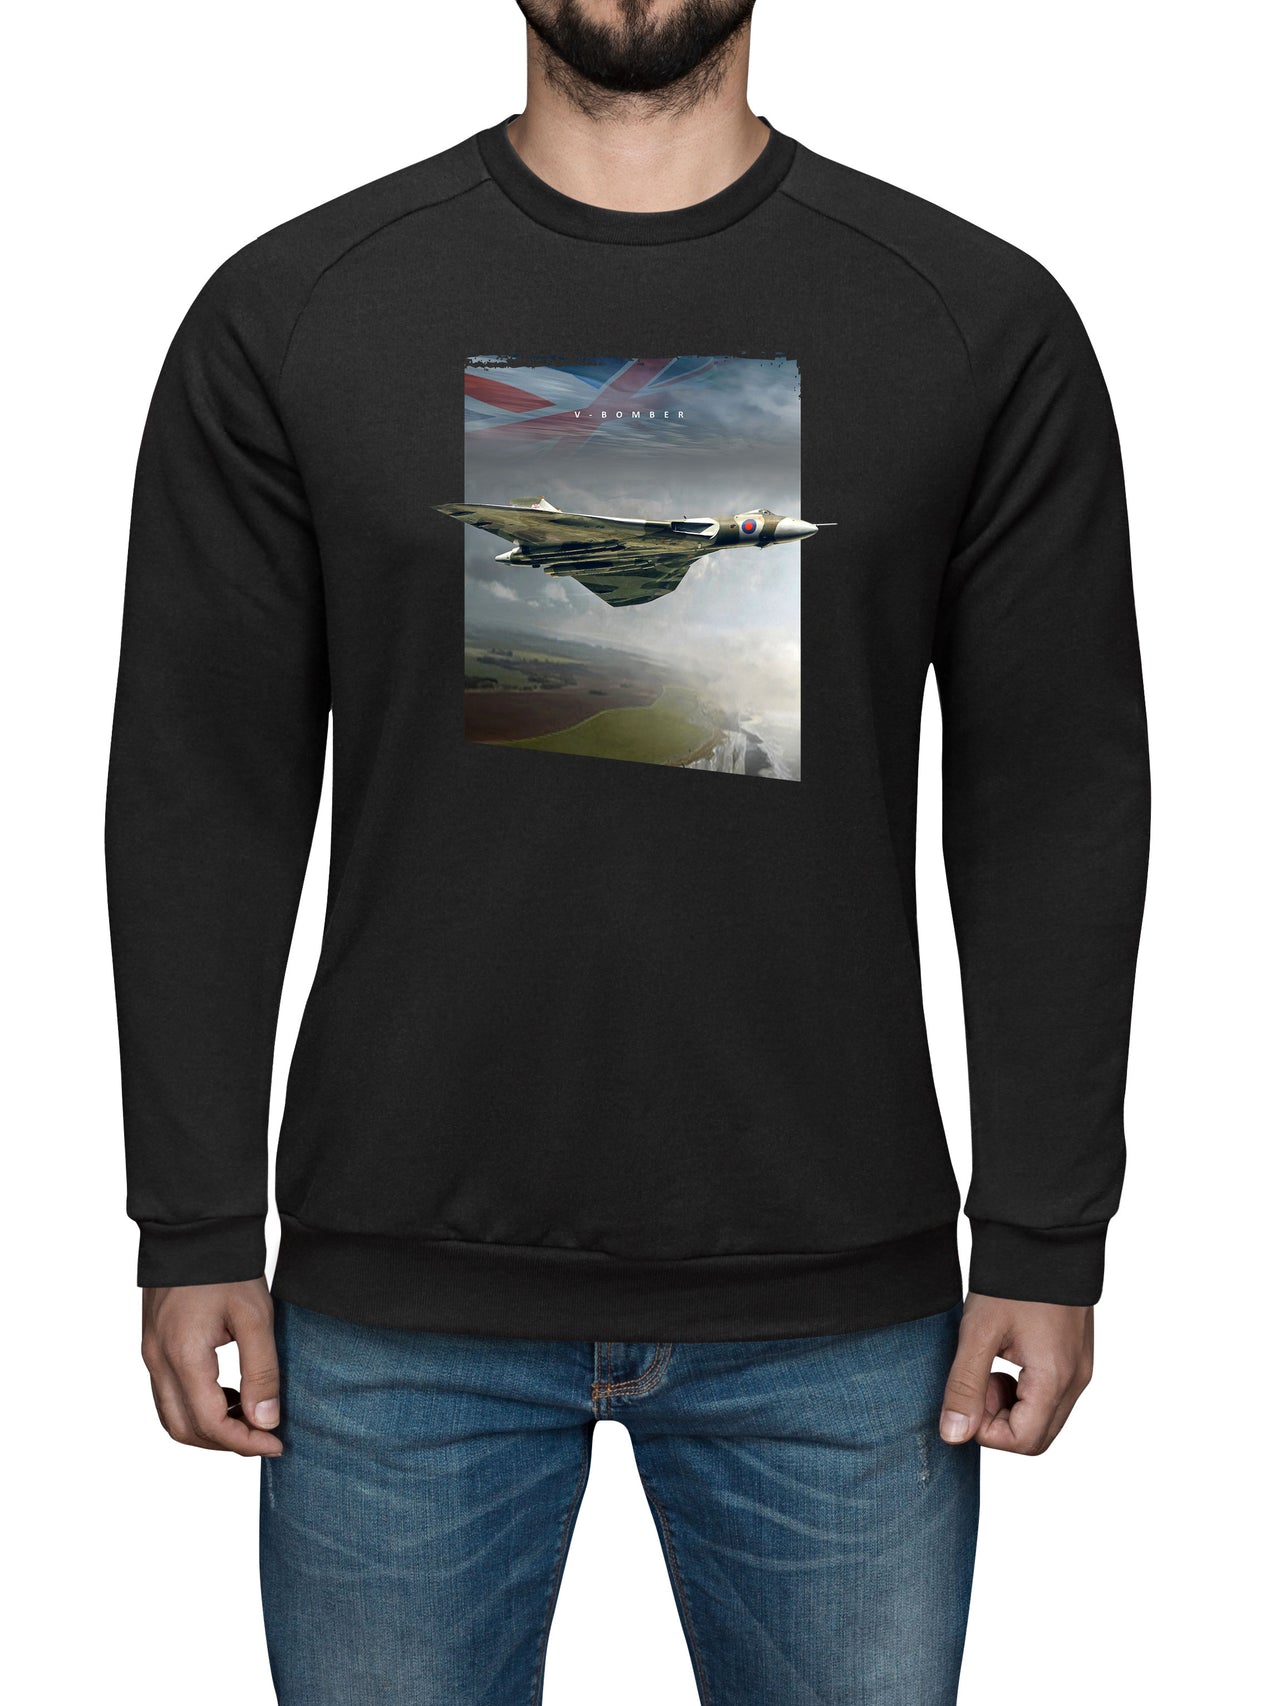 Avro Vulcan - Sweat Shirt